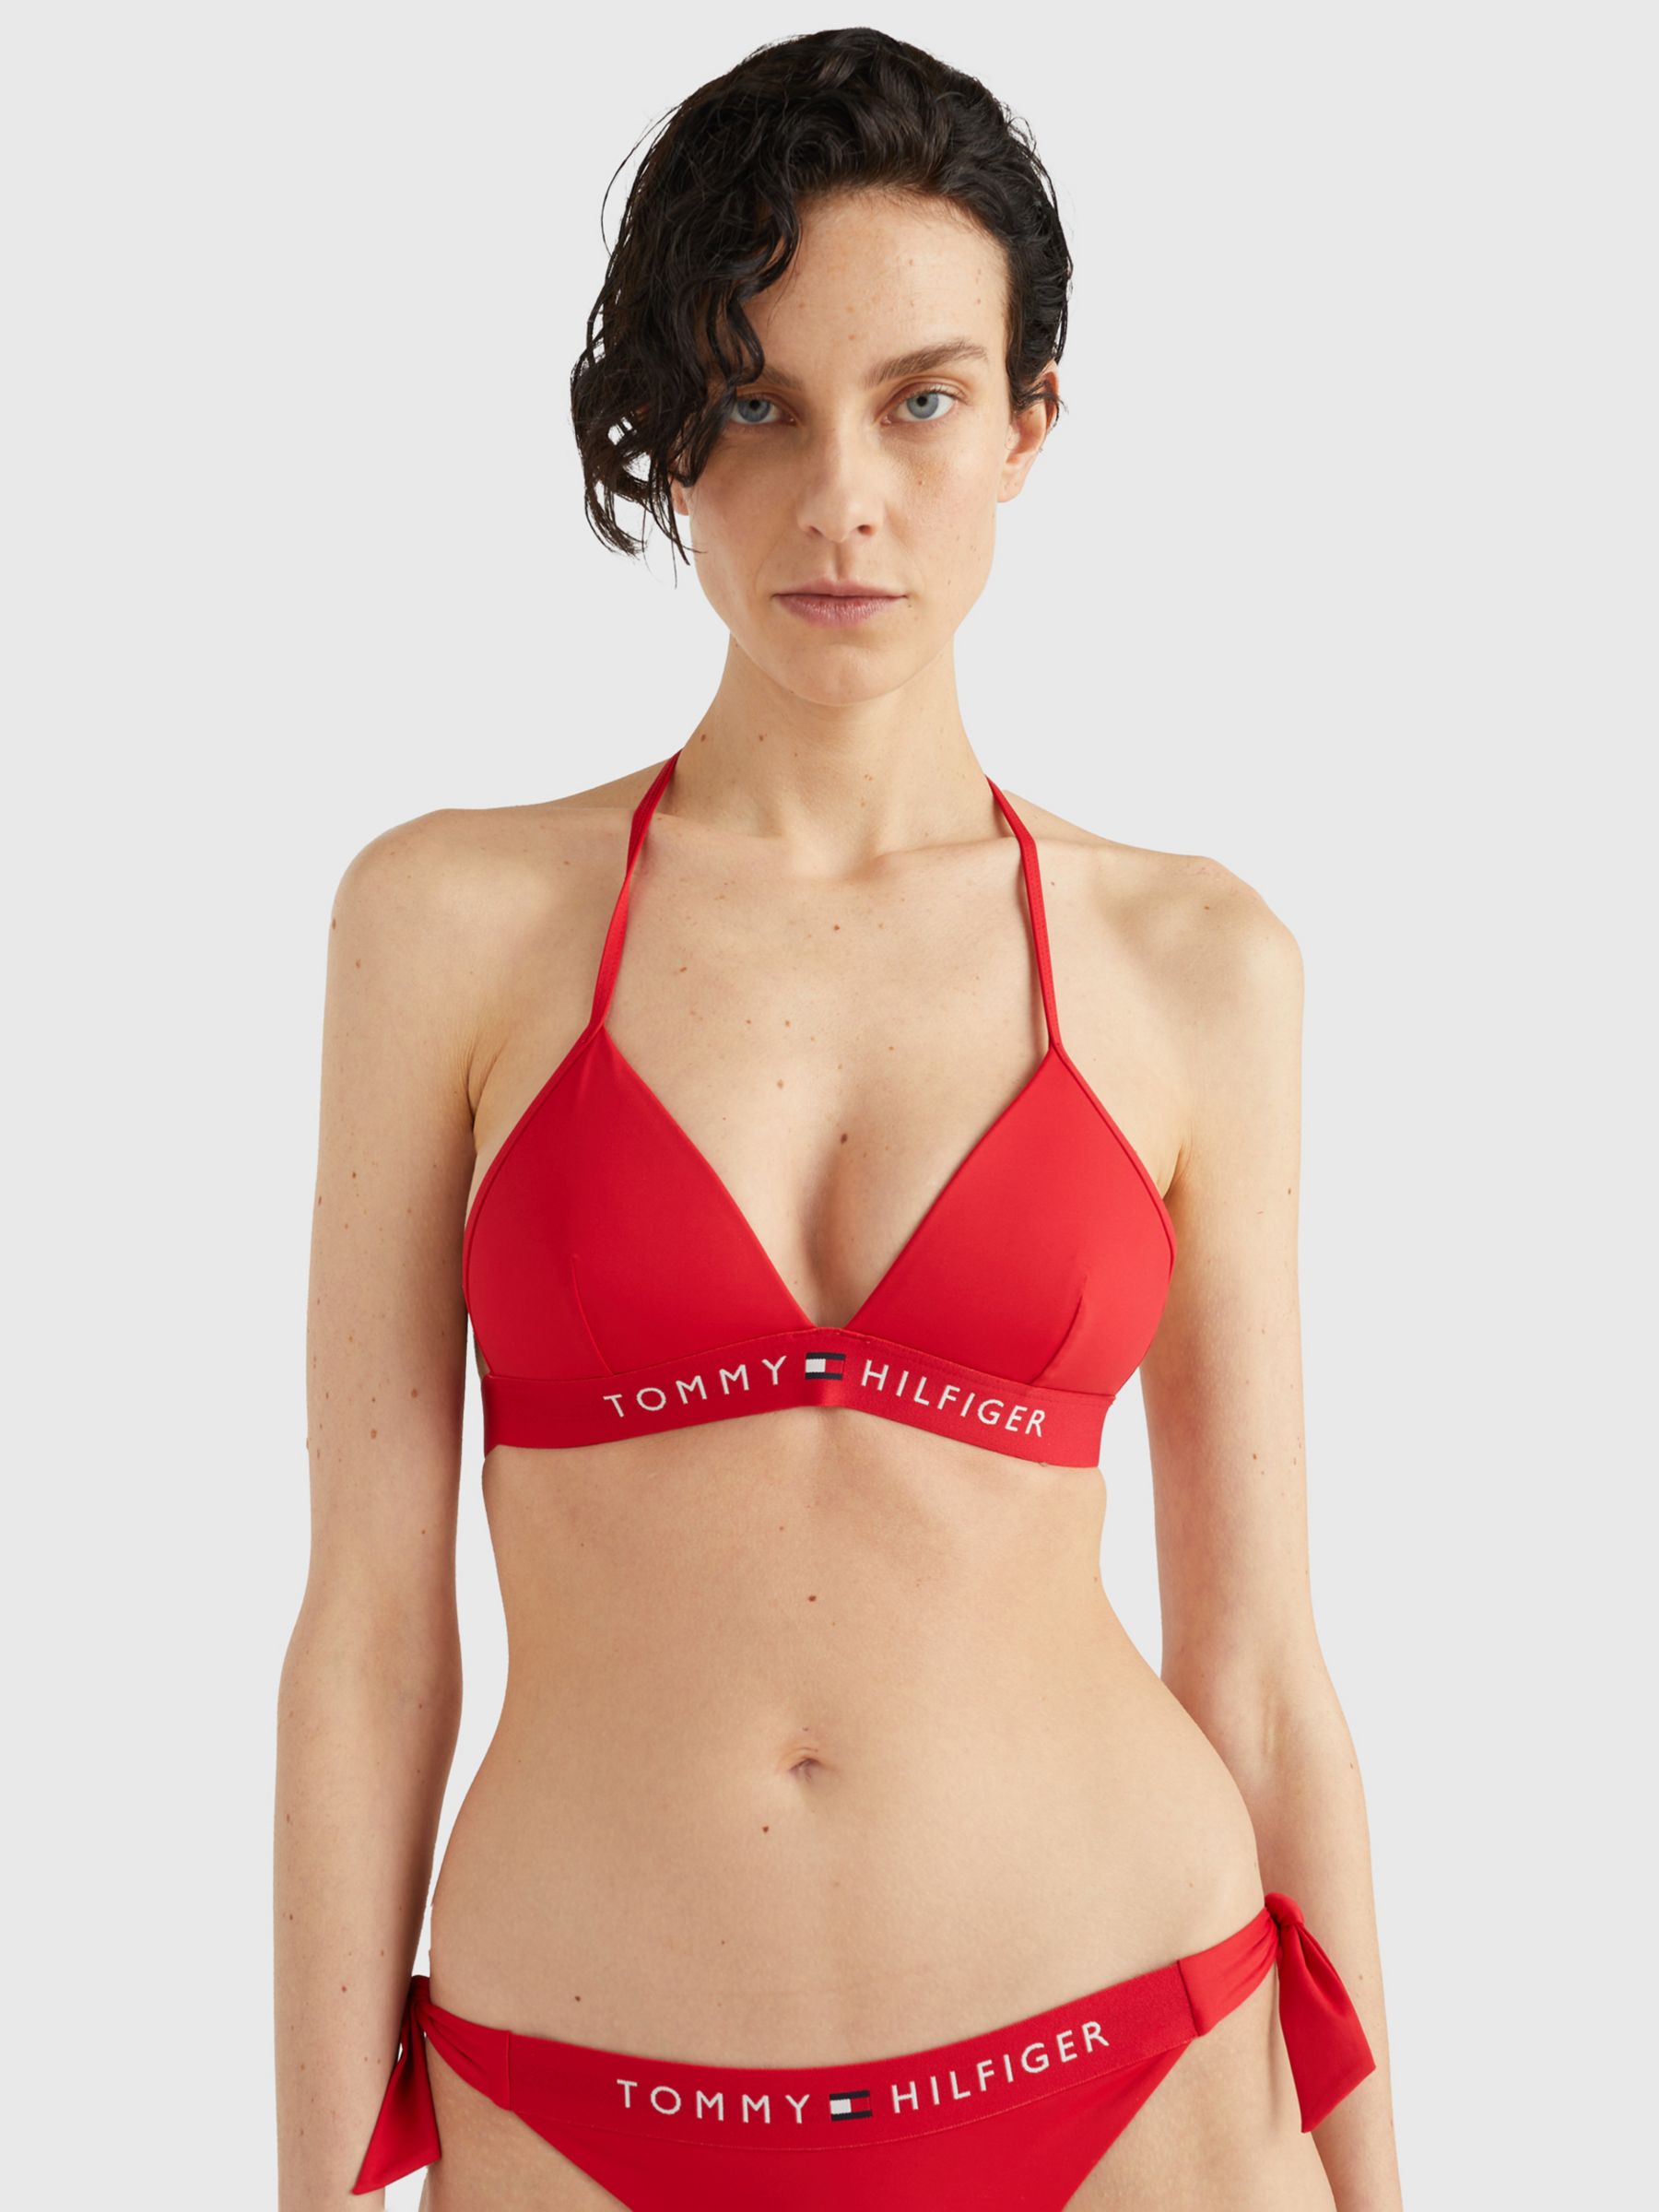 Tommy Hilfiger Fixed Foam Triangle Bikini Top, Primary Red, XS